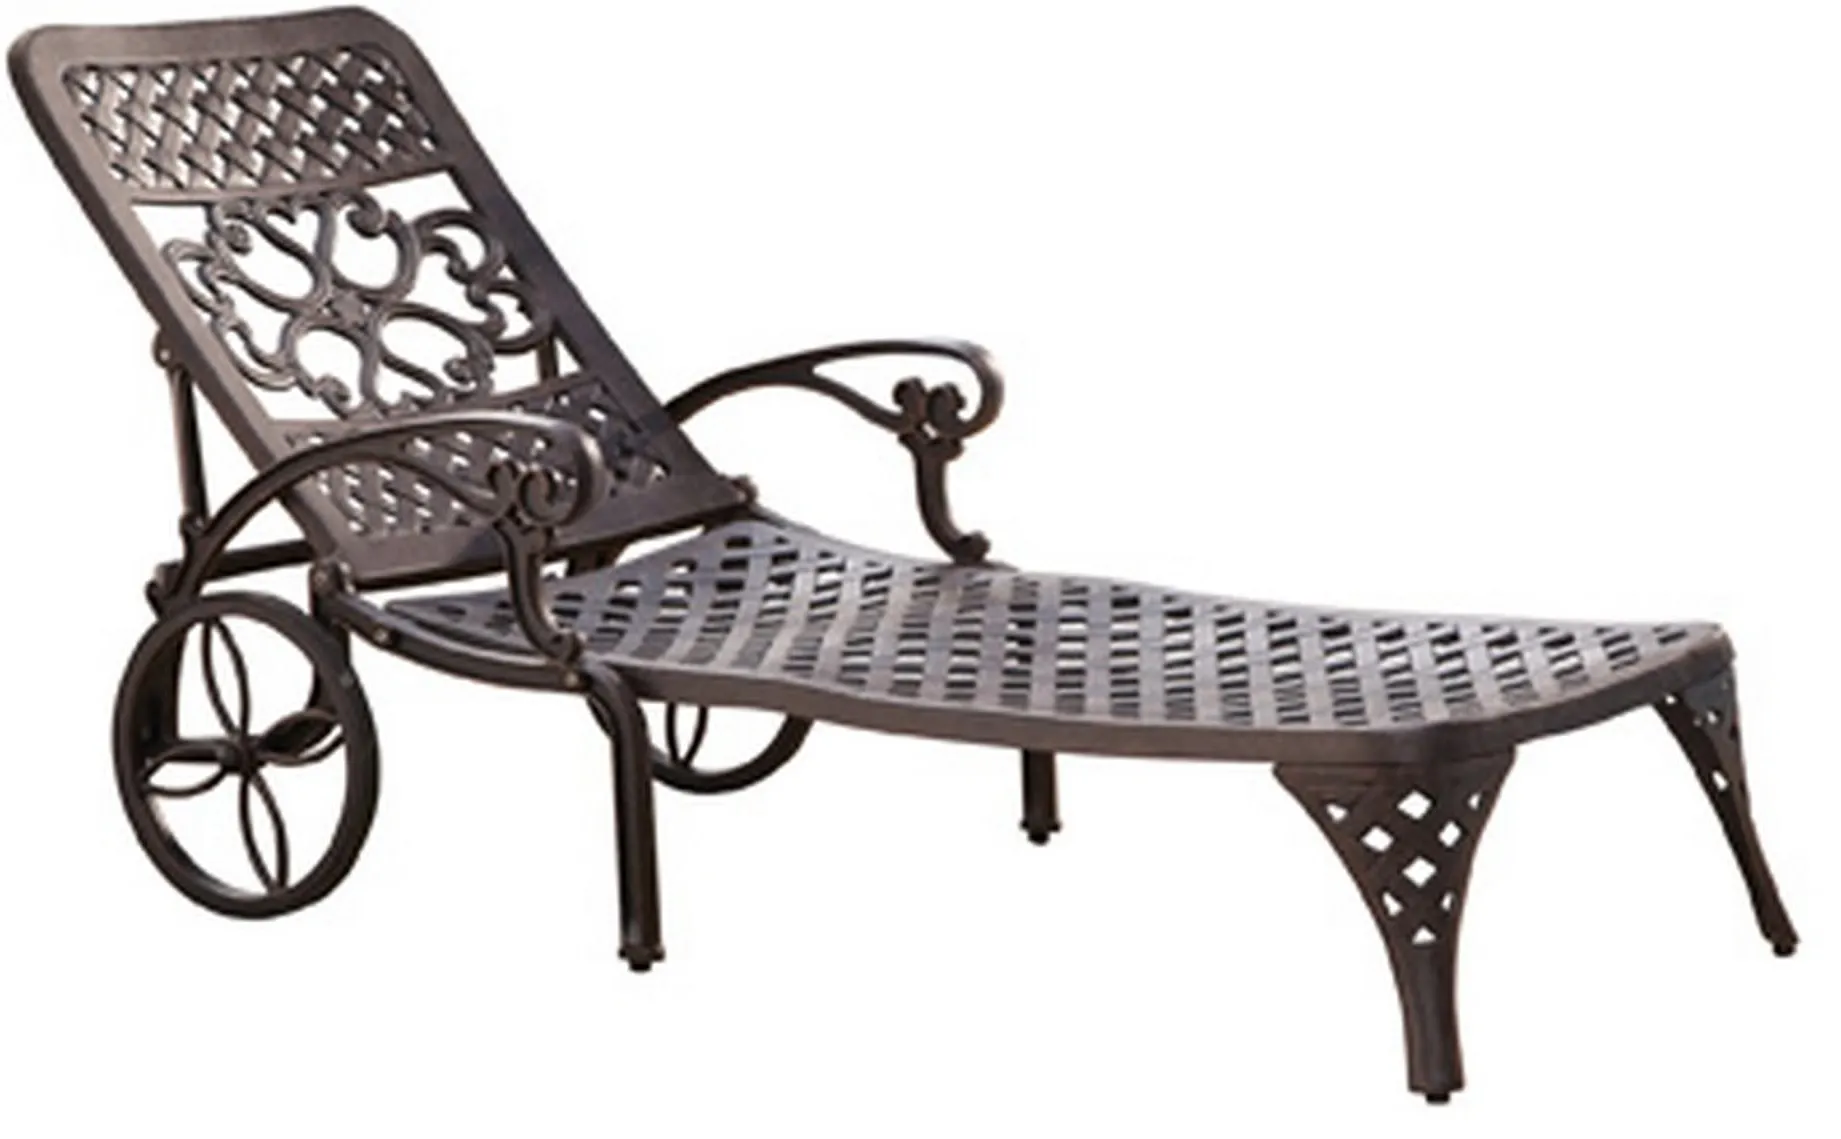 homestyles® Sanibel Bronze Outdoor Chaise Lounge